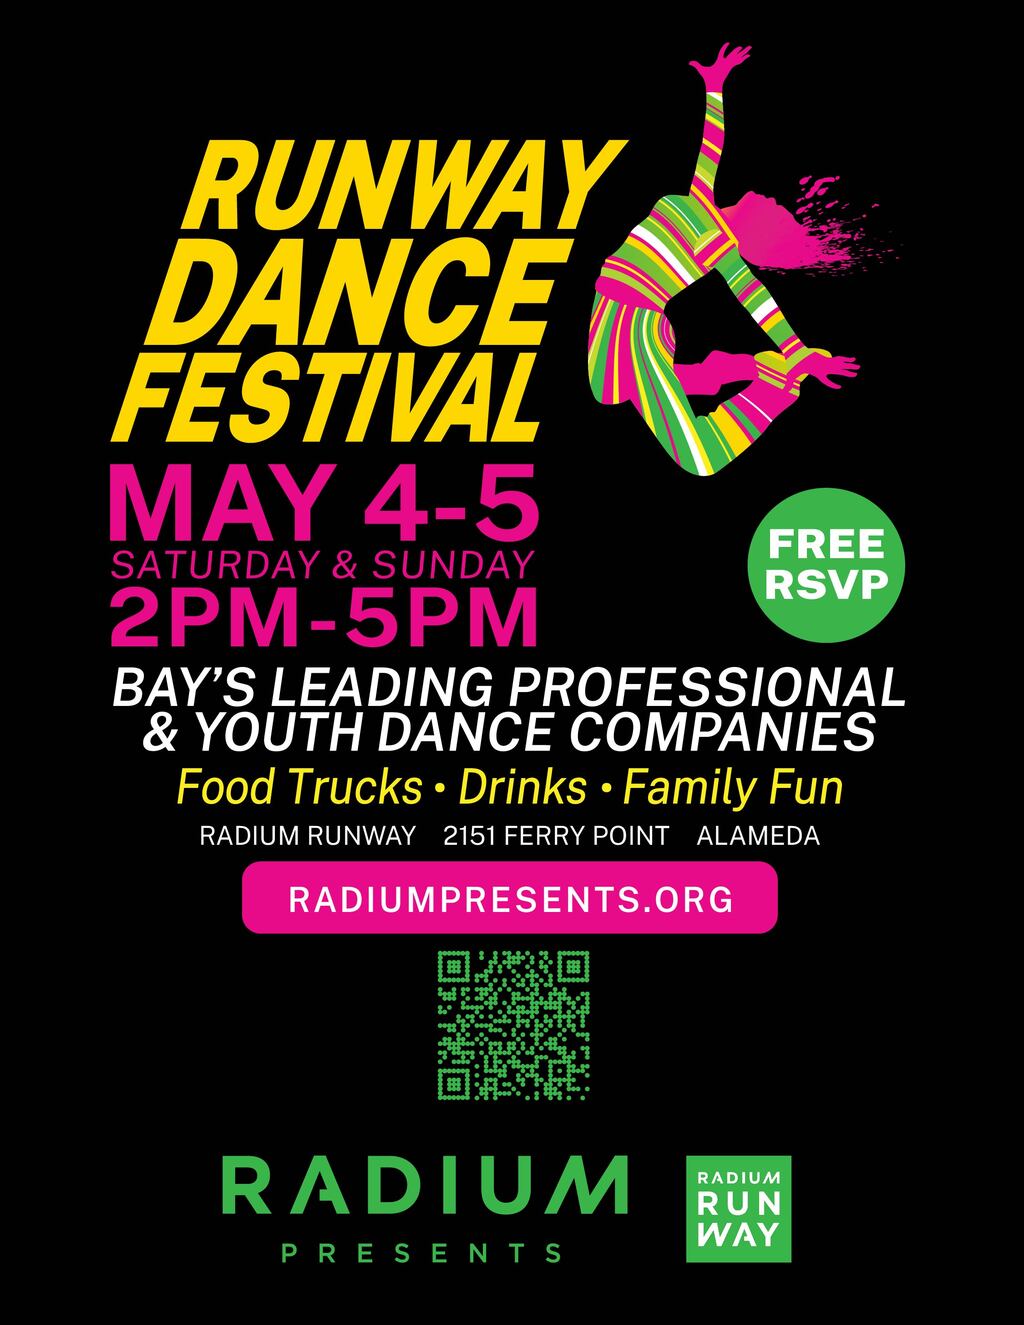  Dance and Fun at Radium Runway Festival on May 4 5  promotion flier on Digifli com